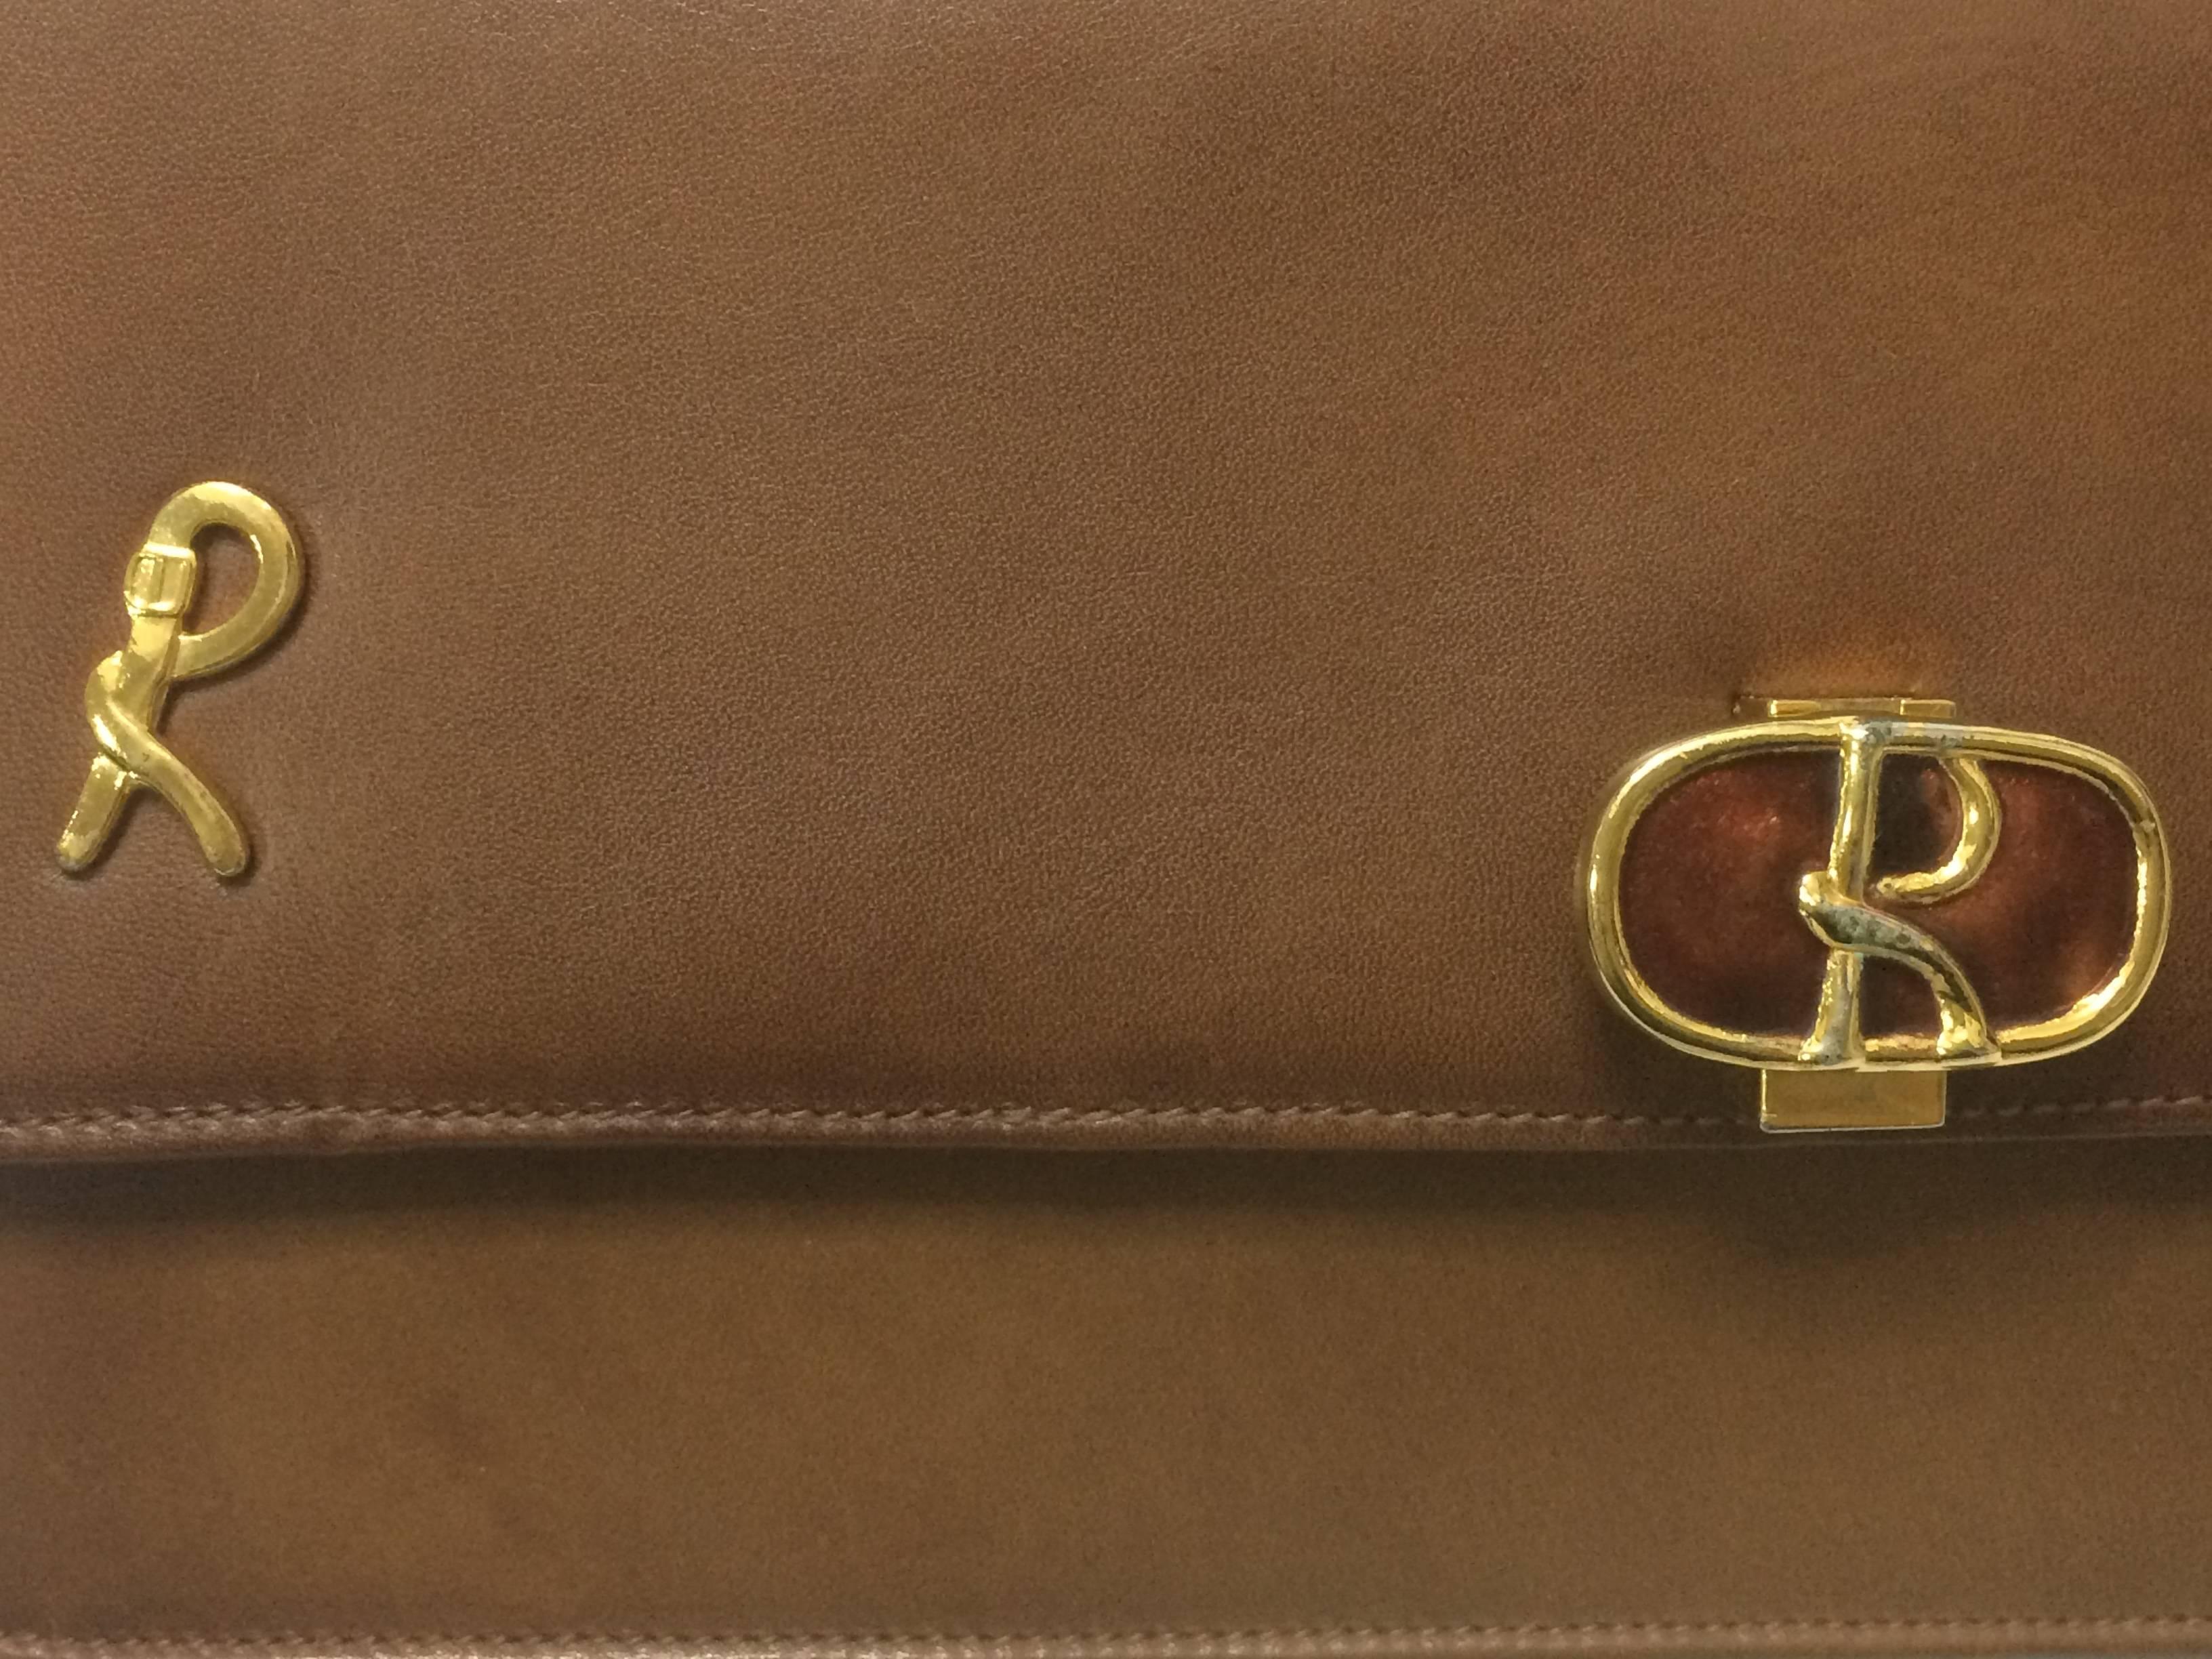 purse with r logo